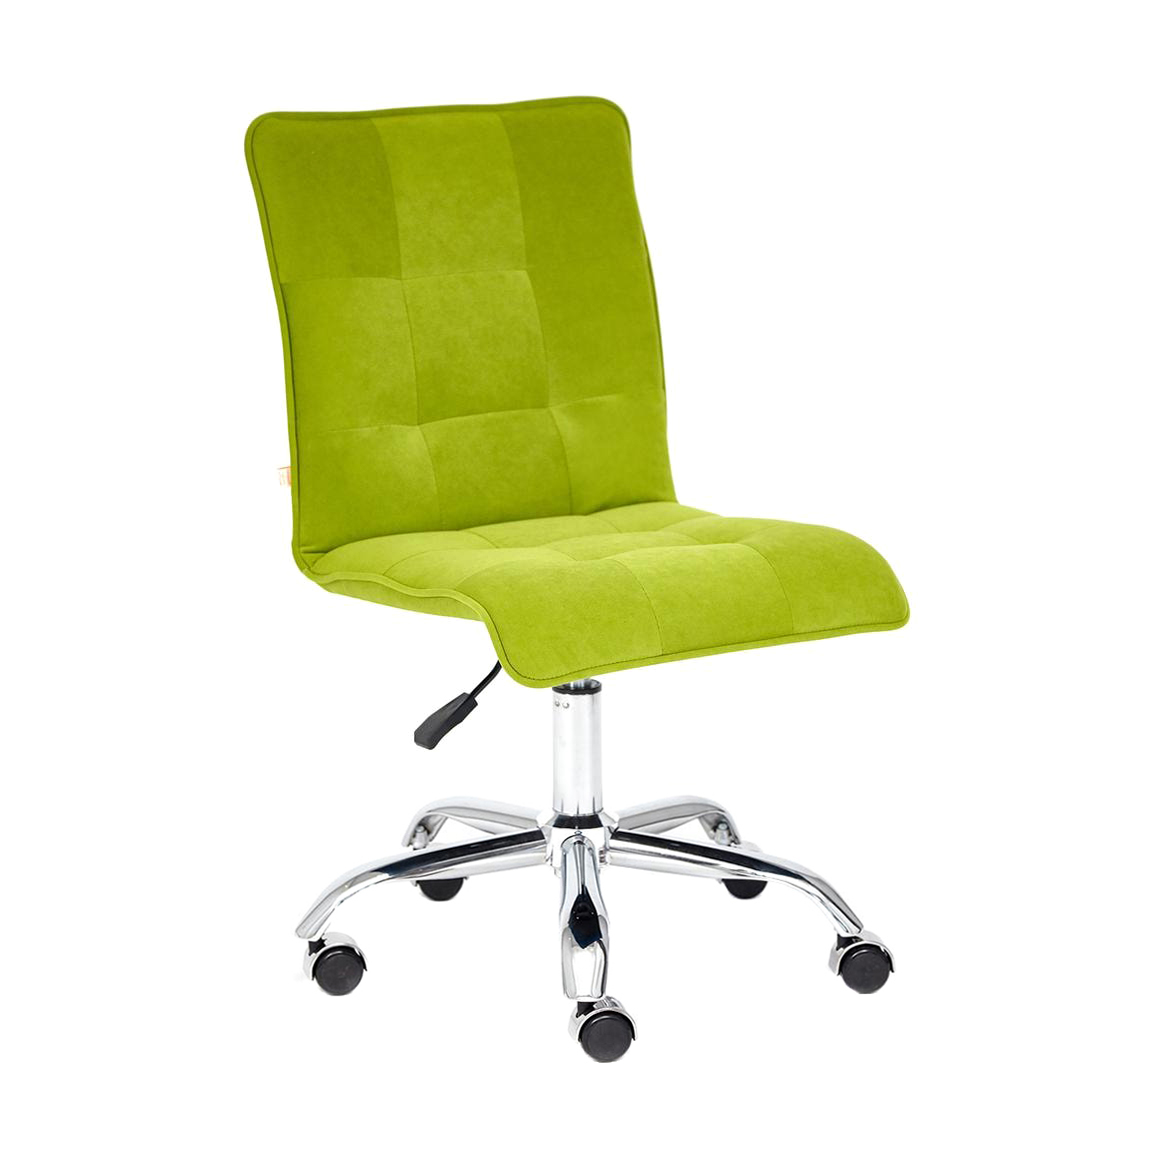 Кресло офисное TC до 100 кг 96х45х40 см оливковый кресло офисное tc до 100 кг 96х45х40 см коричневый